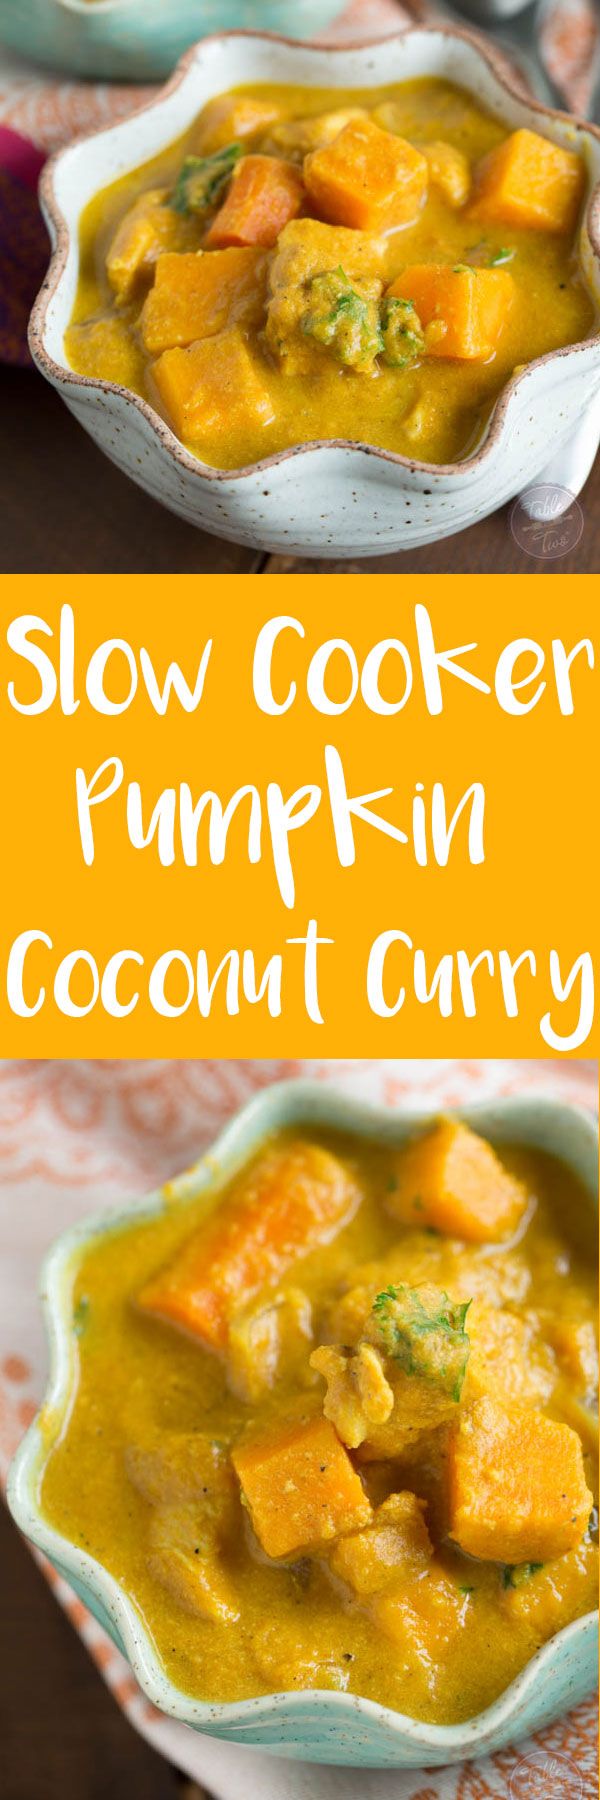 Slow Cooker Pumpkin Coconut Curry